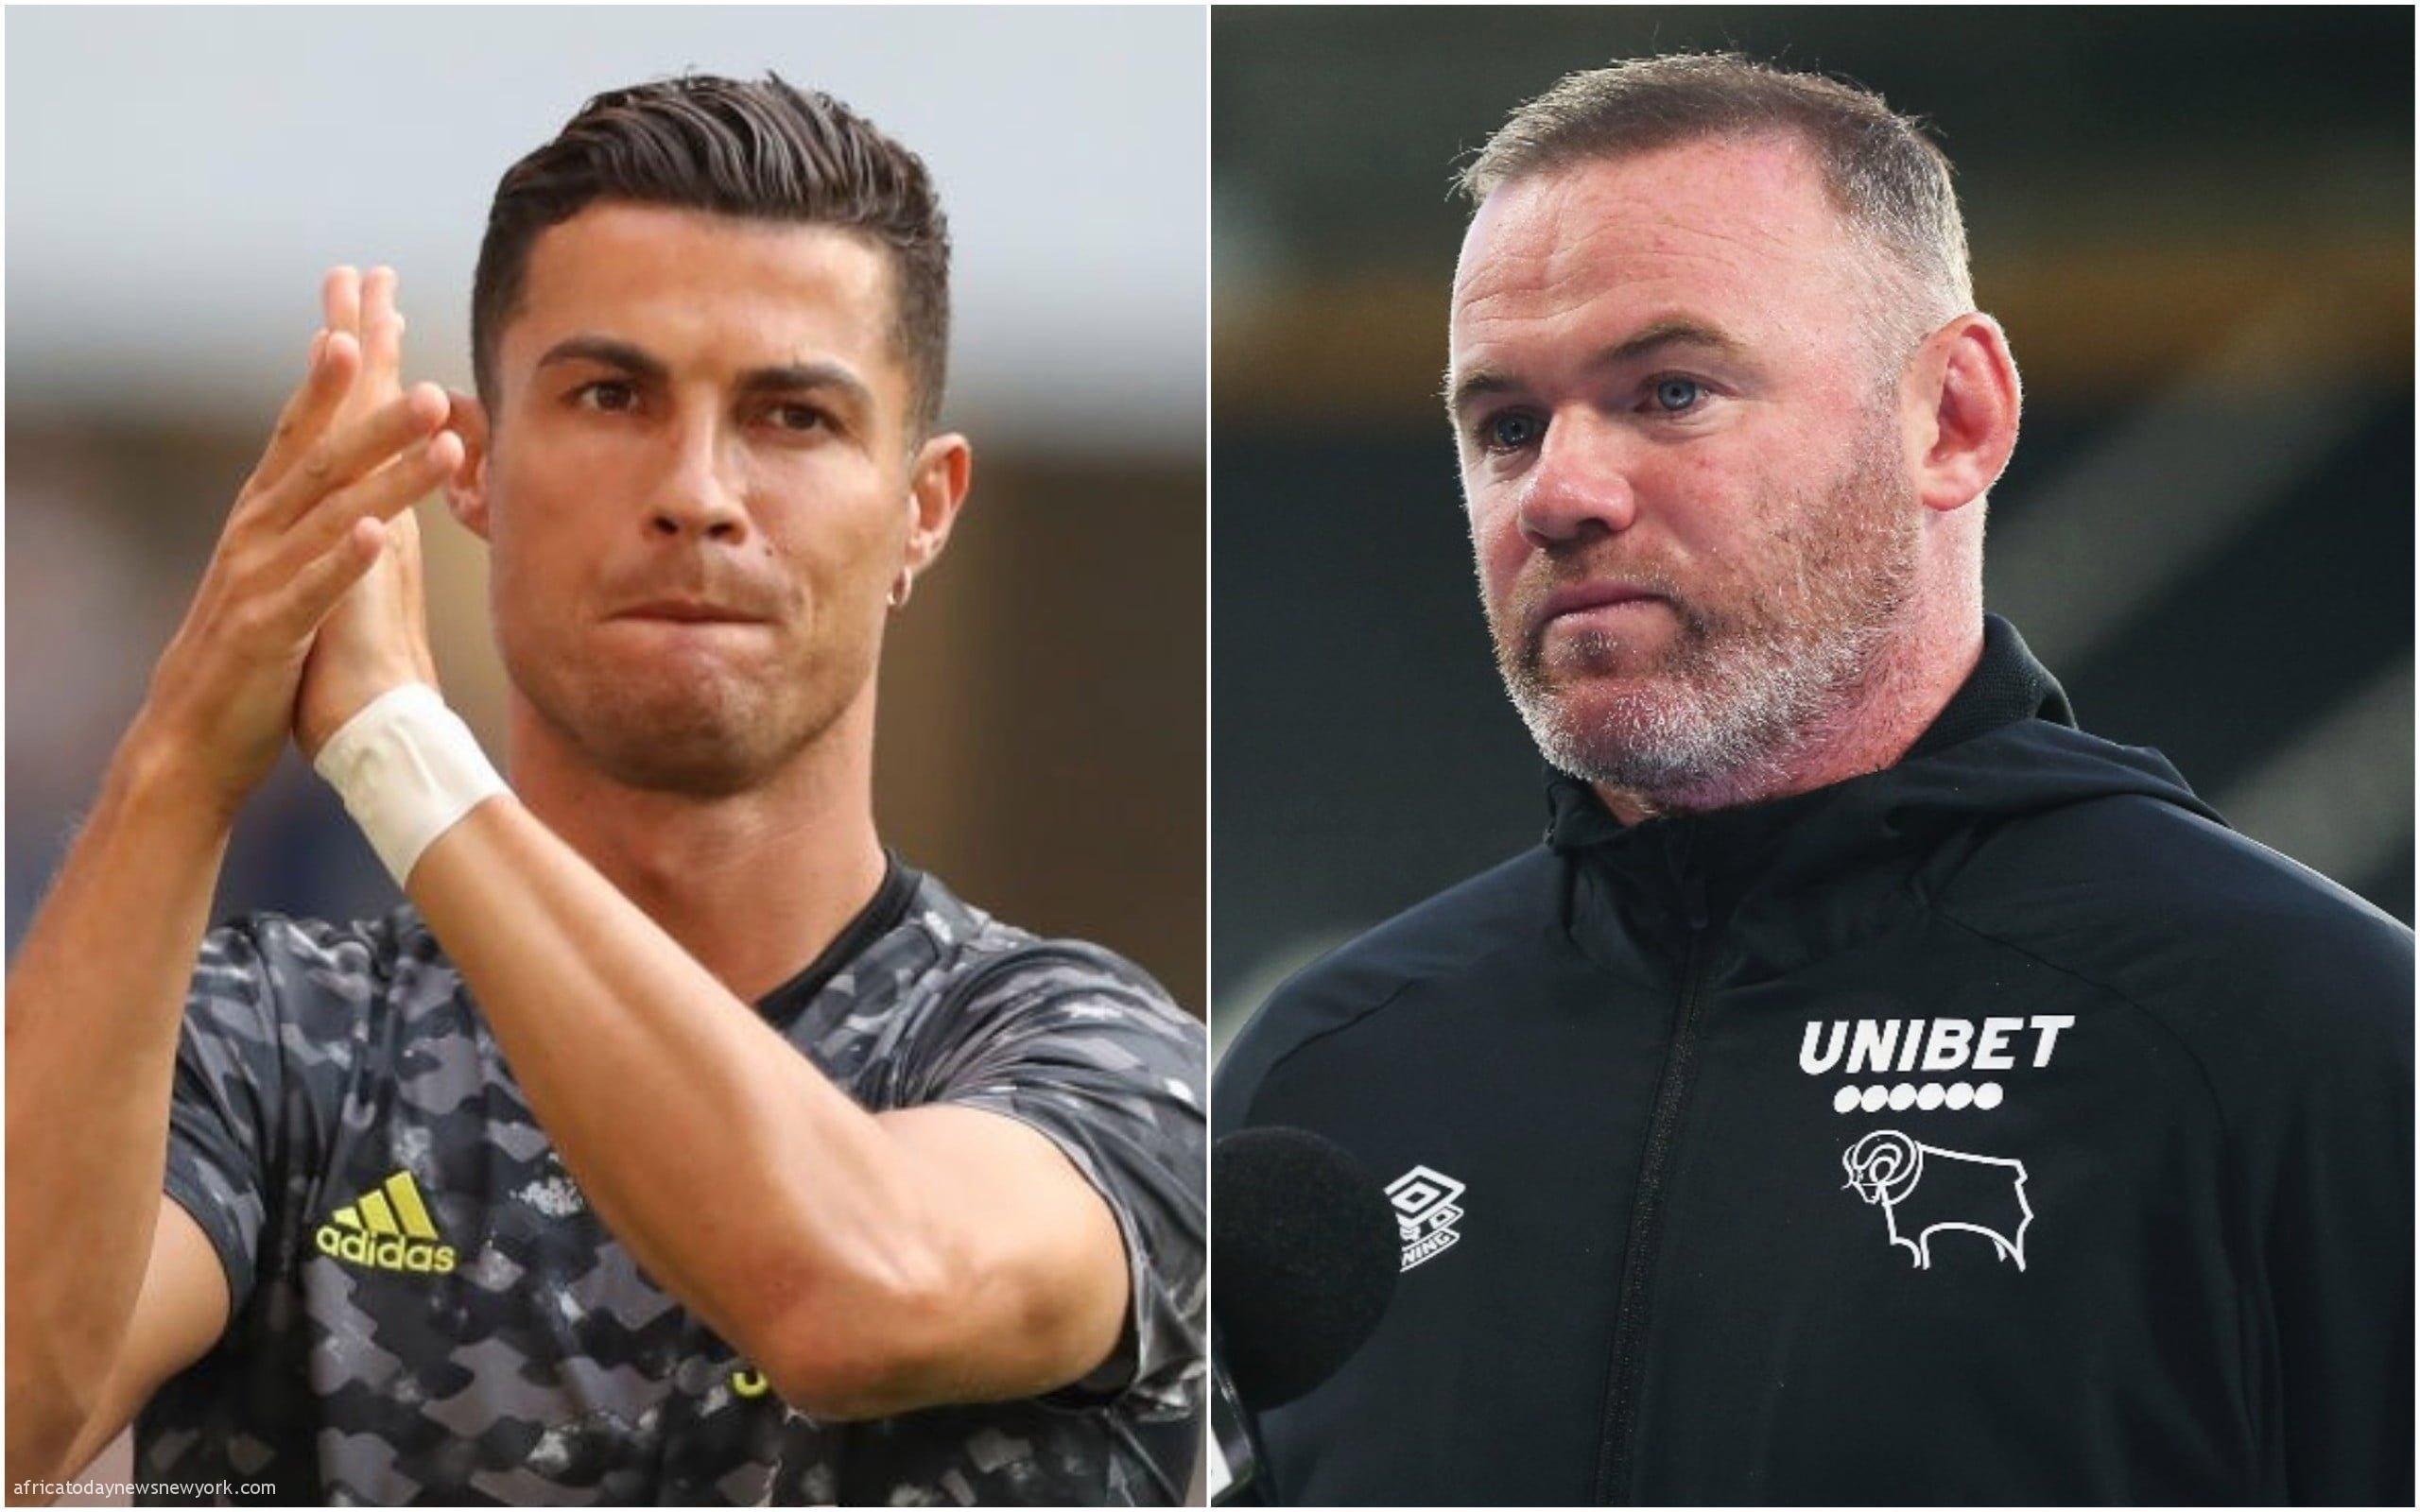 'I Won’t Respond To You' – Rooney Hits Back At Ronaldo